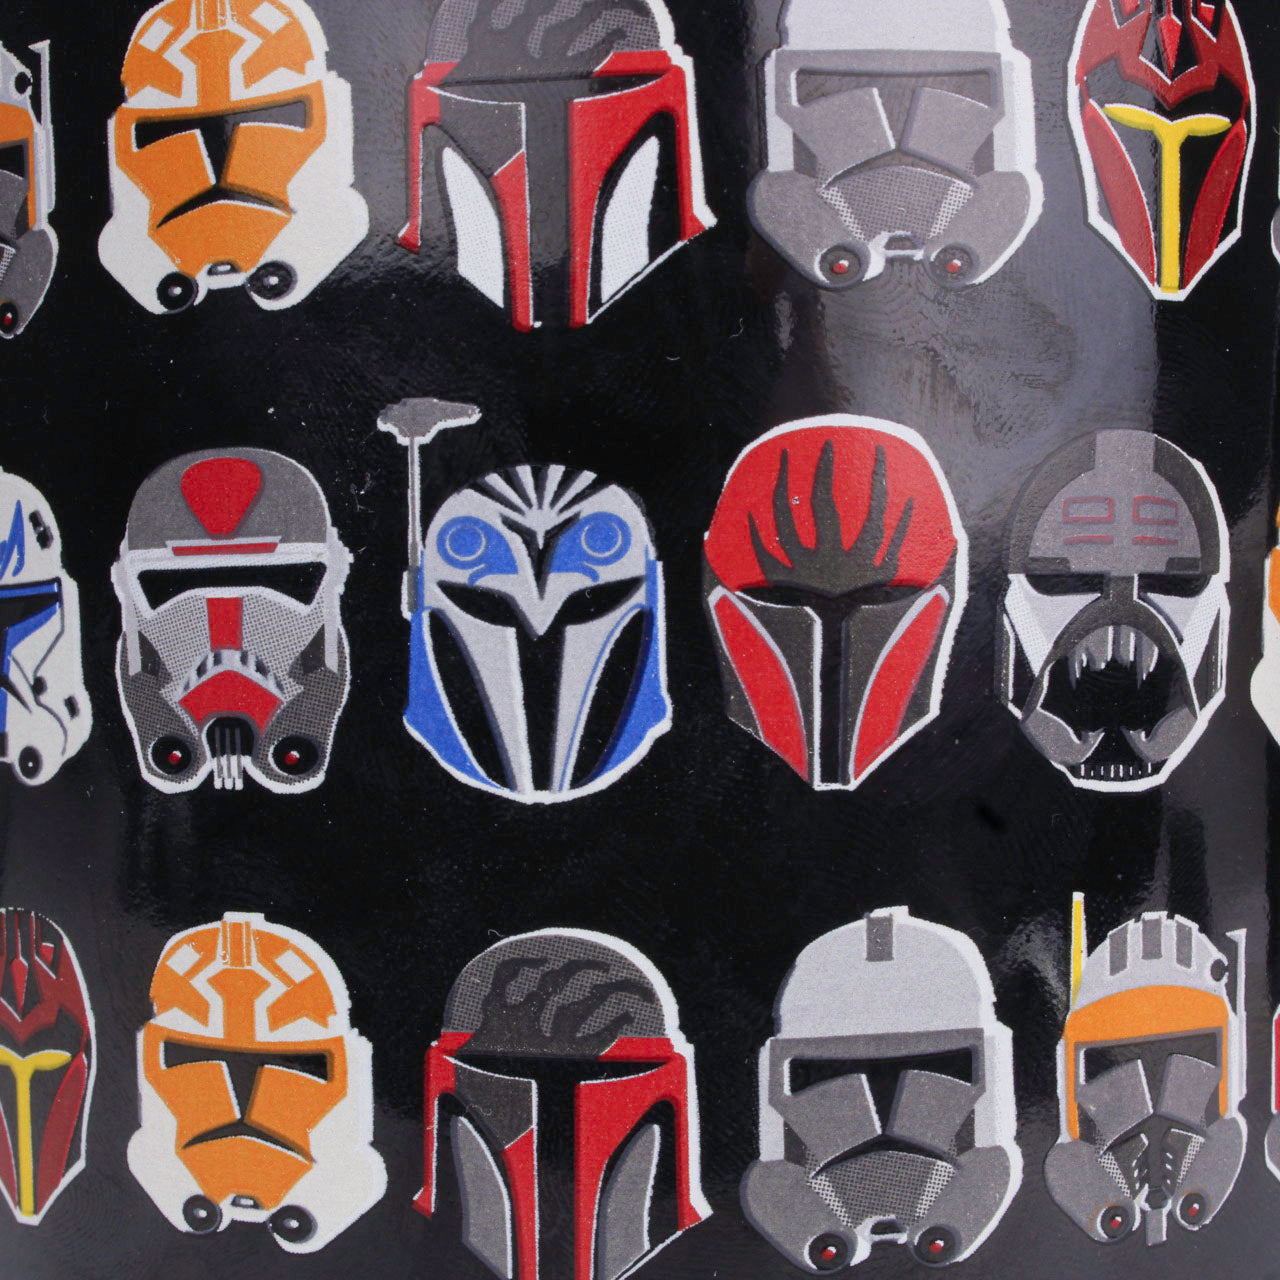 Star Wars The Clone Wars Helmets 16oz Ceramic Mug